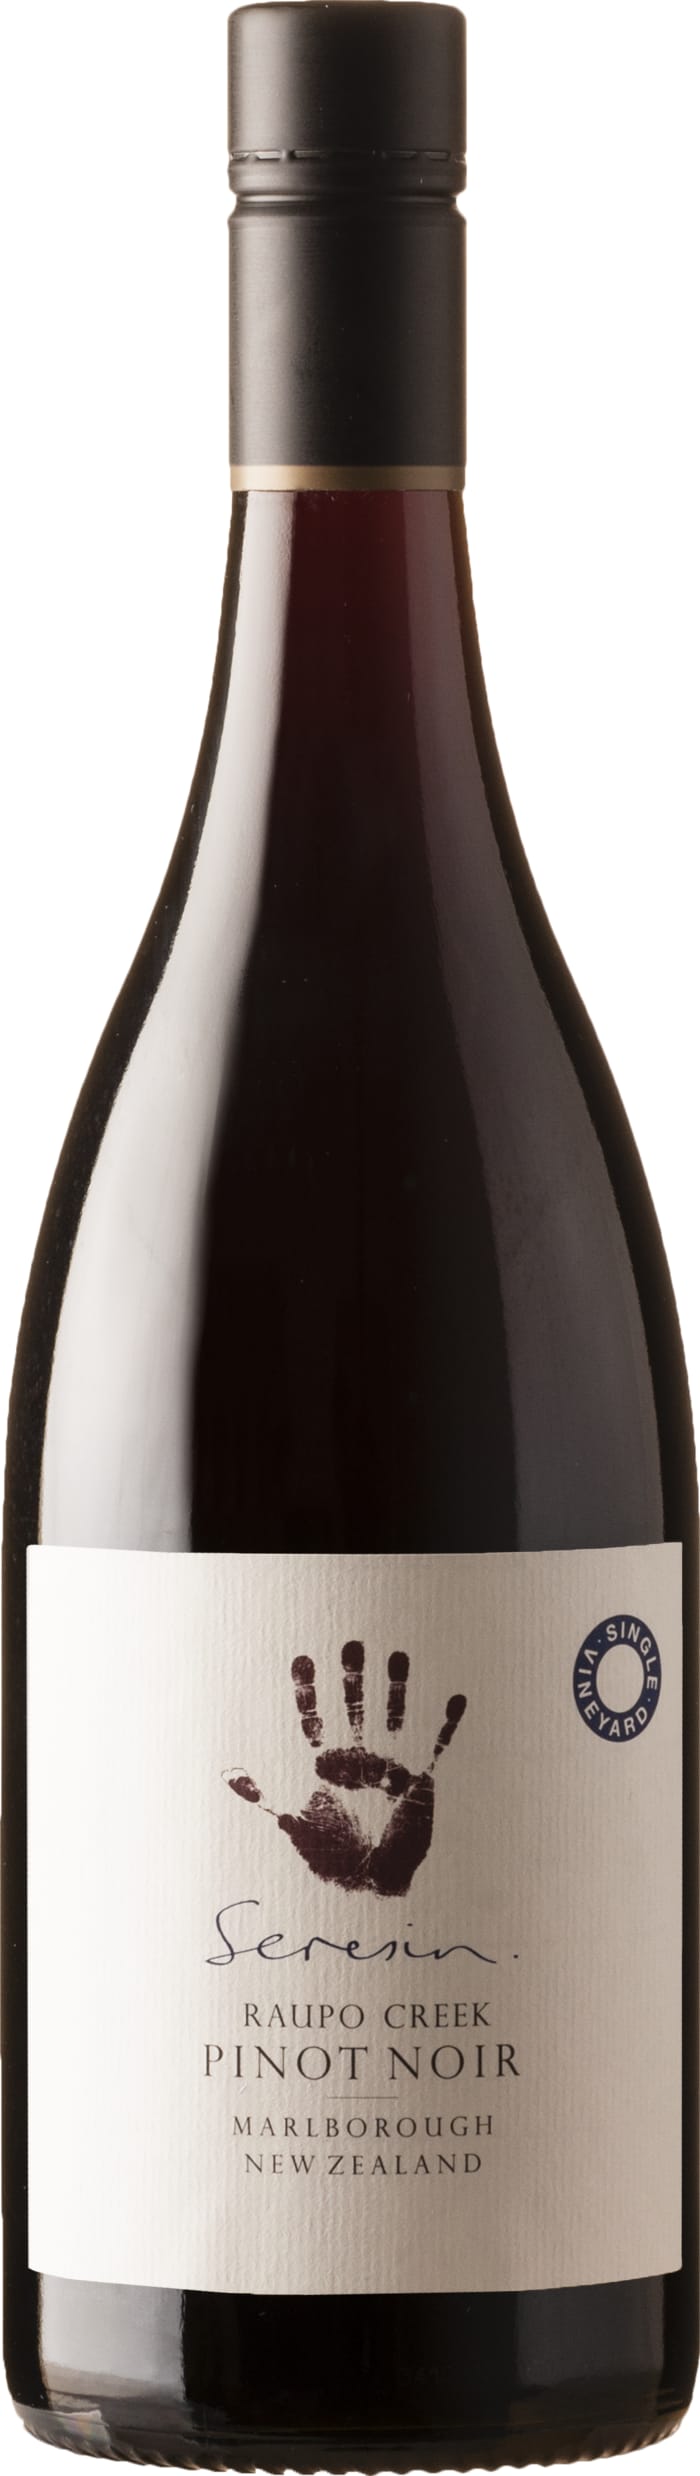 Seresin Estate Raupo Creek Pinot Noir 2015 75cl - Buy Seresin Estate Wines from GREAT WINES DIRECT wine shop